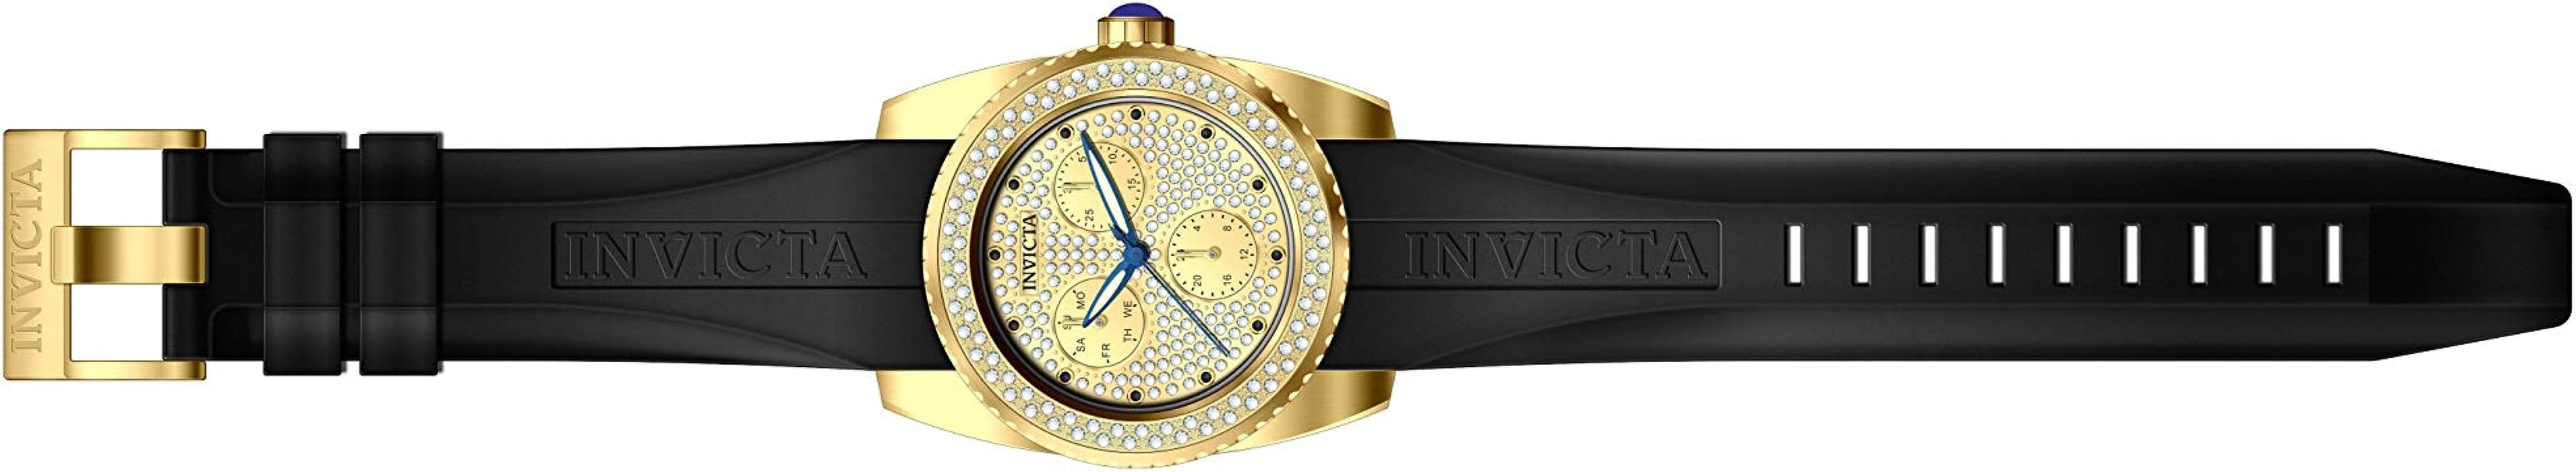 Reloj Invicta 28485 Original